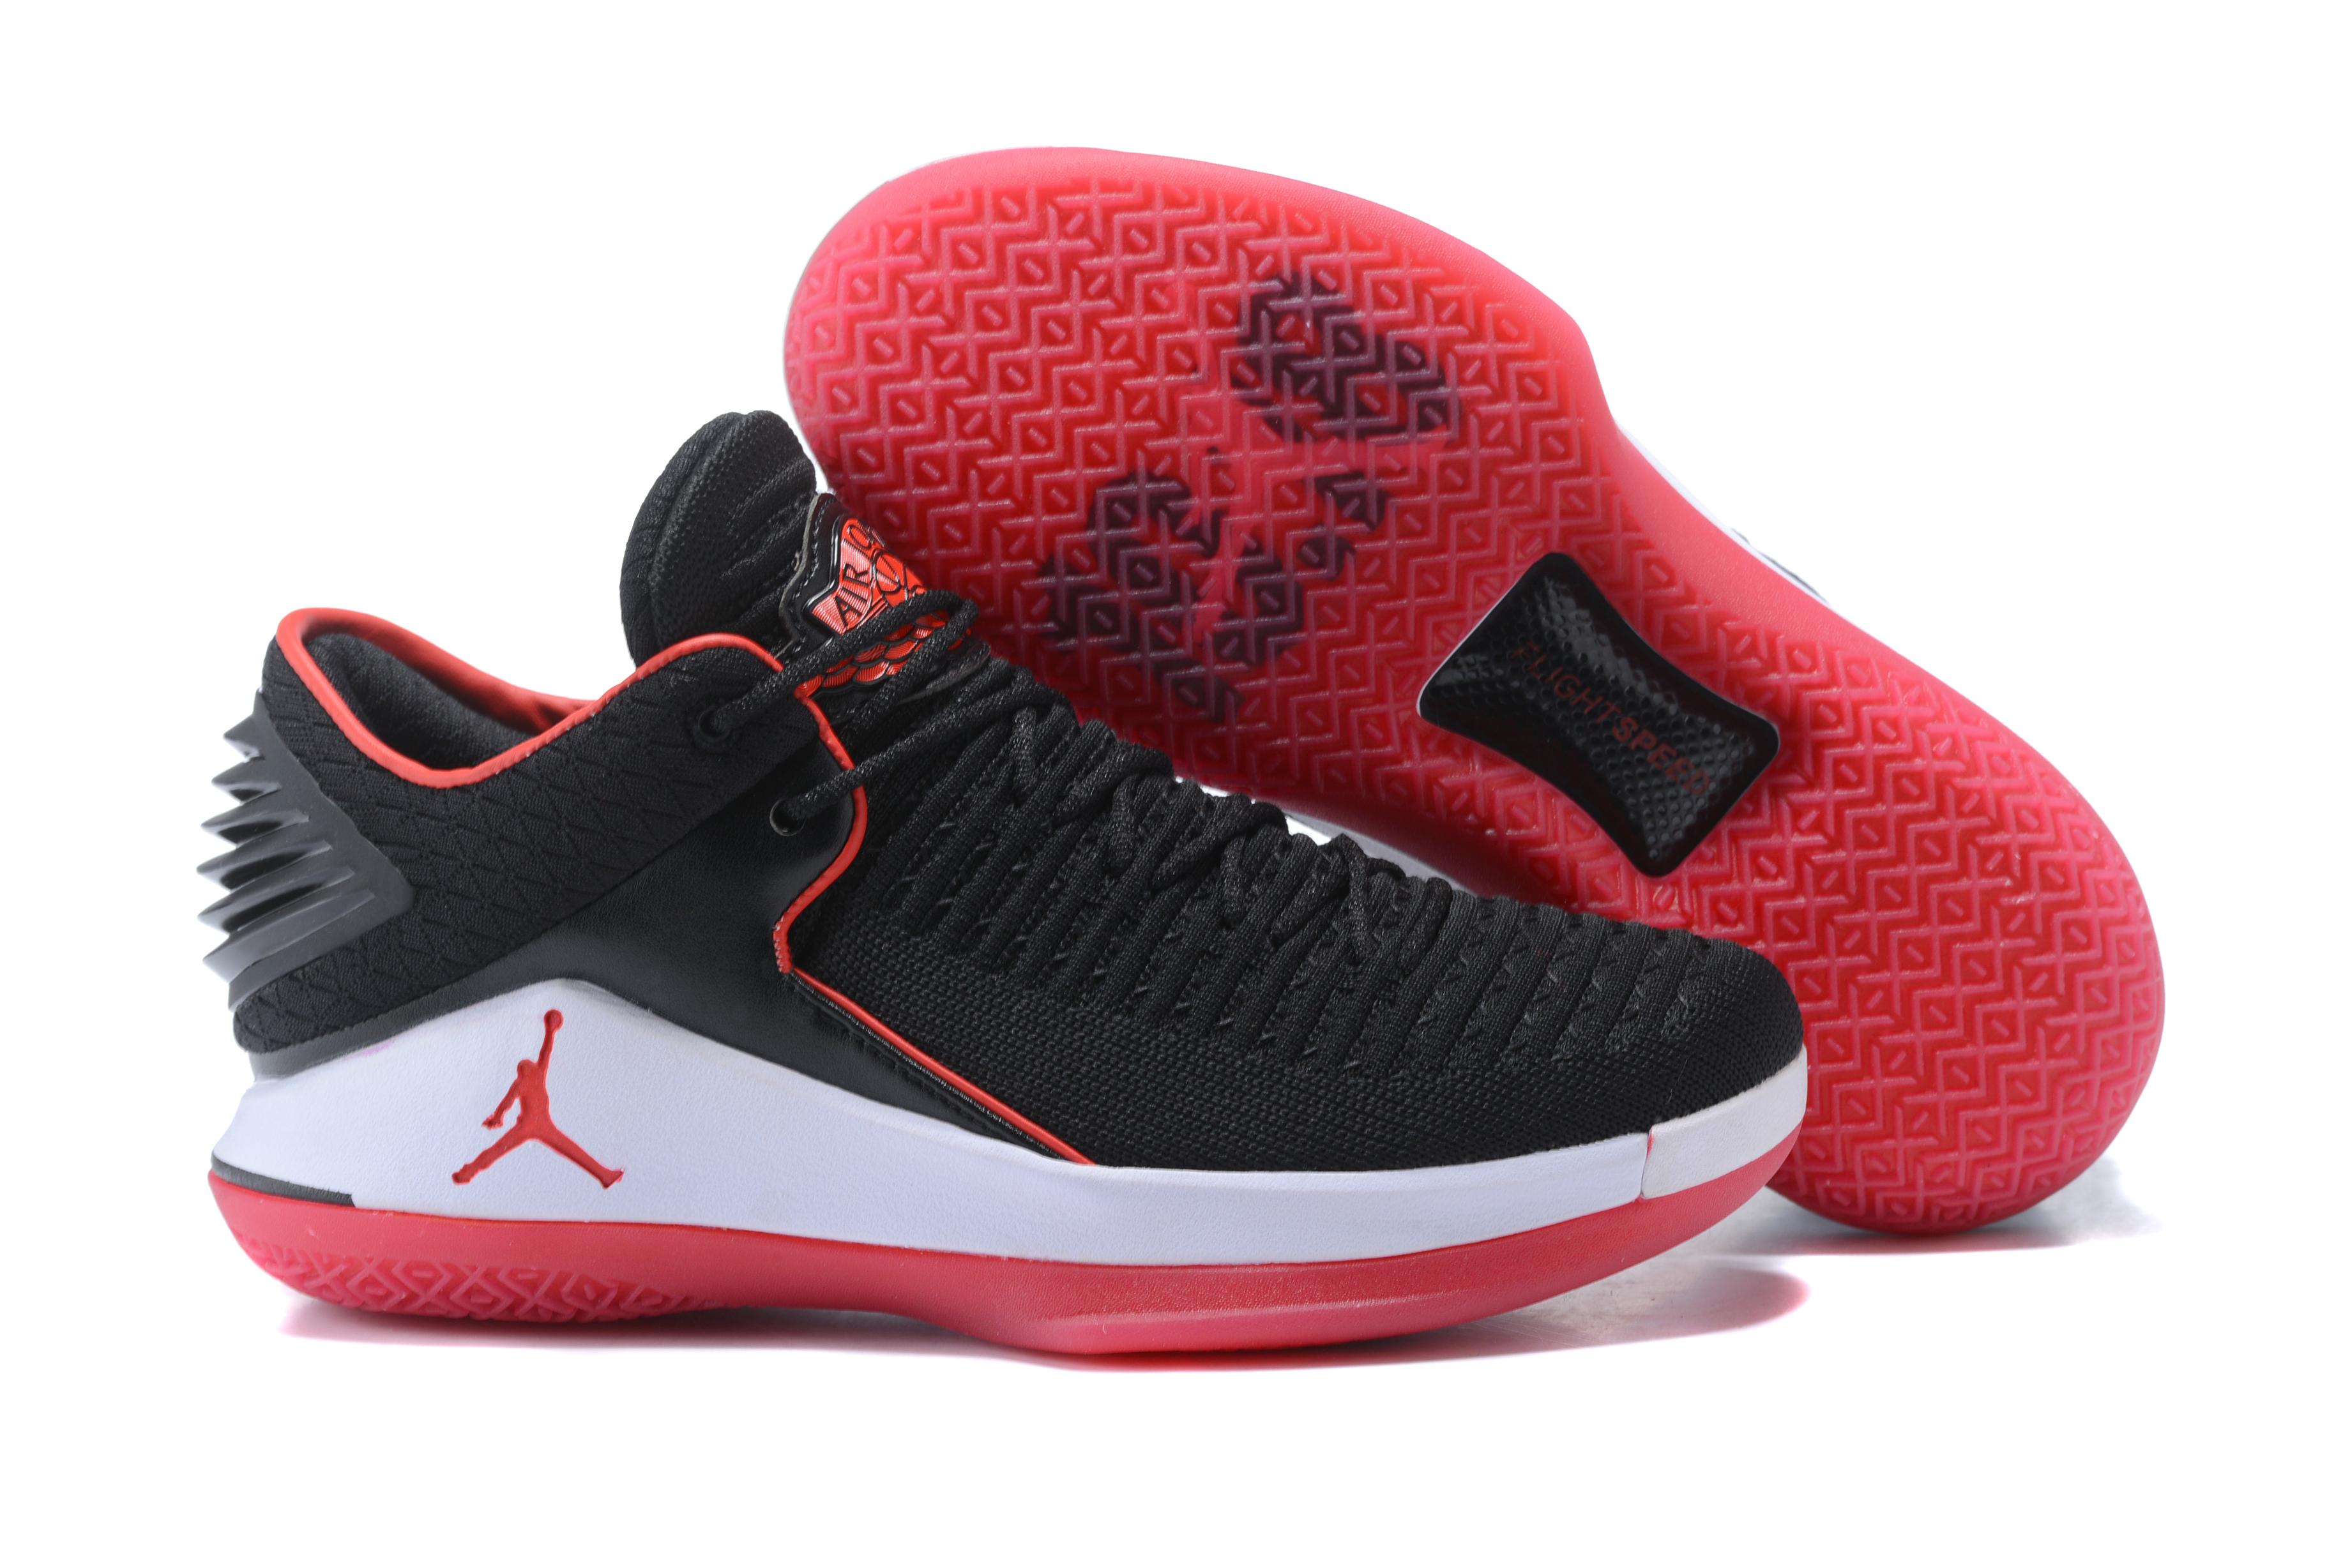 New Air Jordan 32 Black Red White Shoes